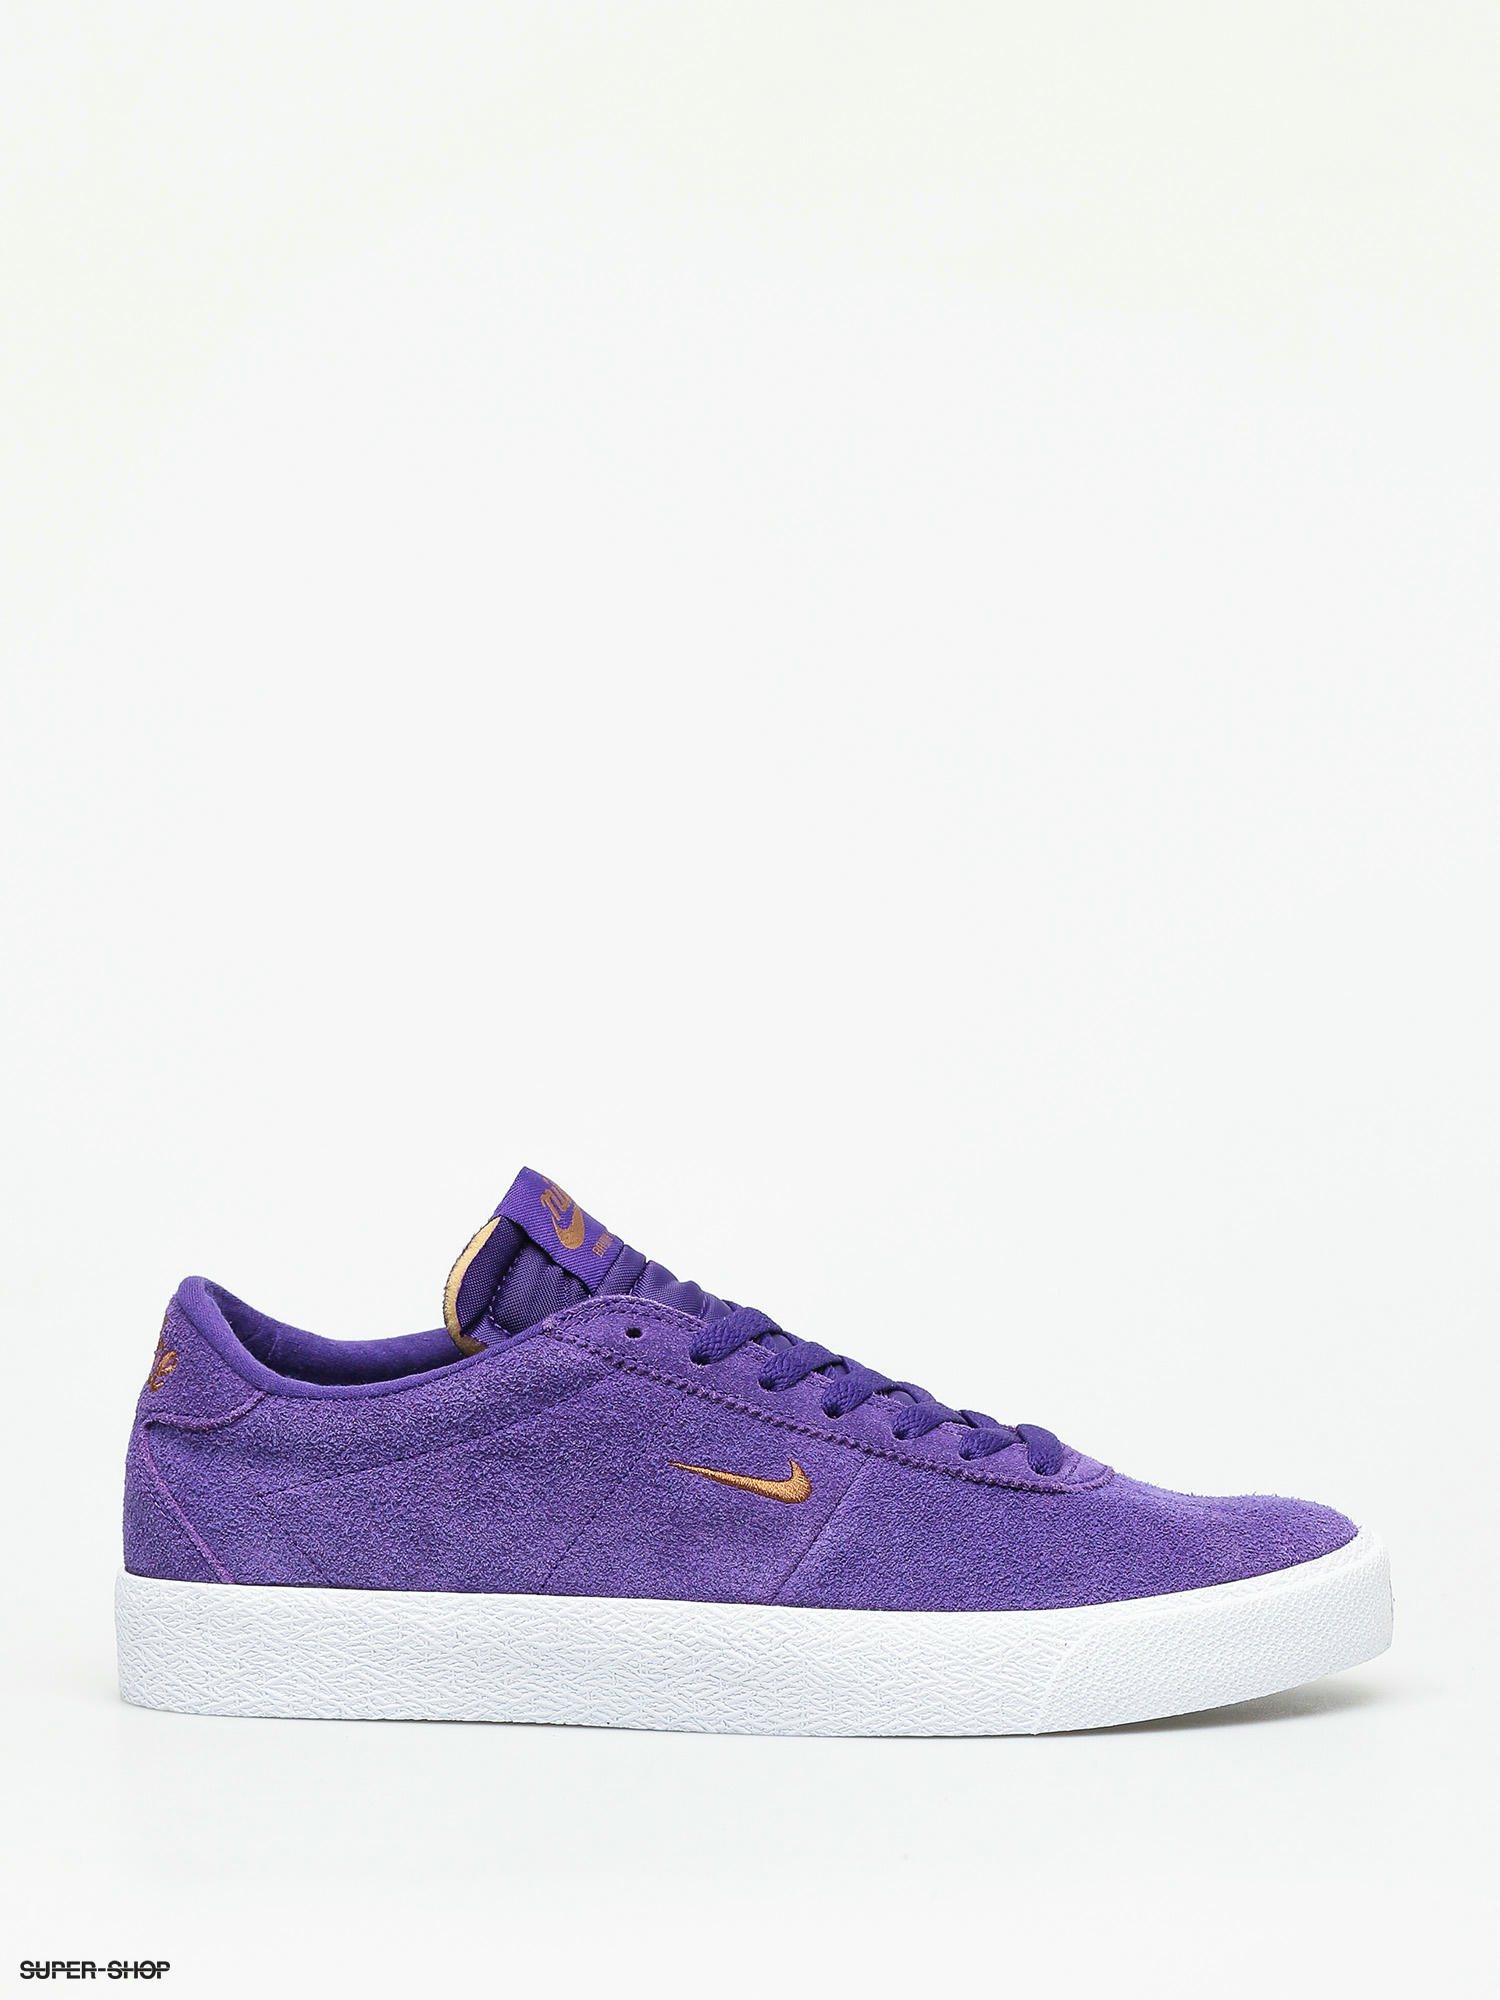 nike sb shoes purple